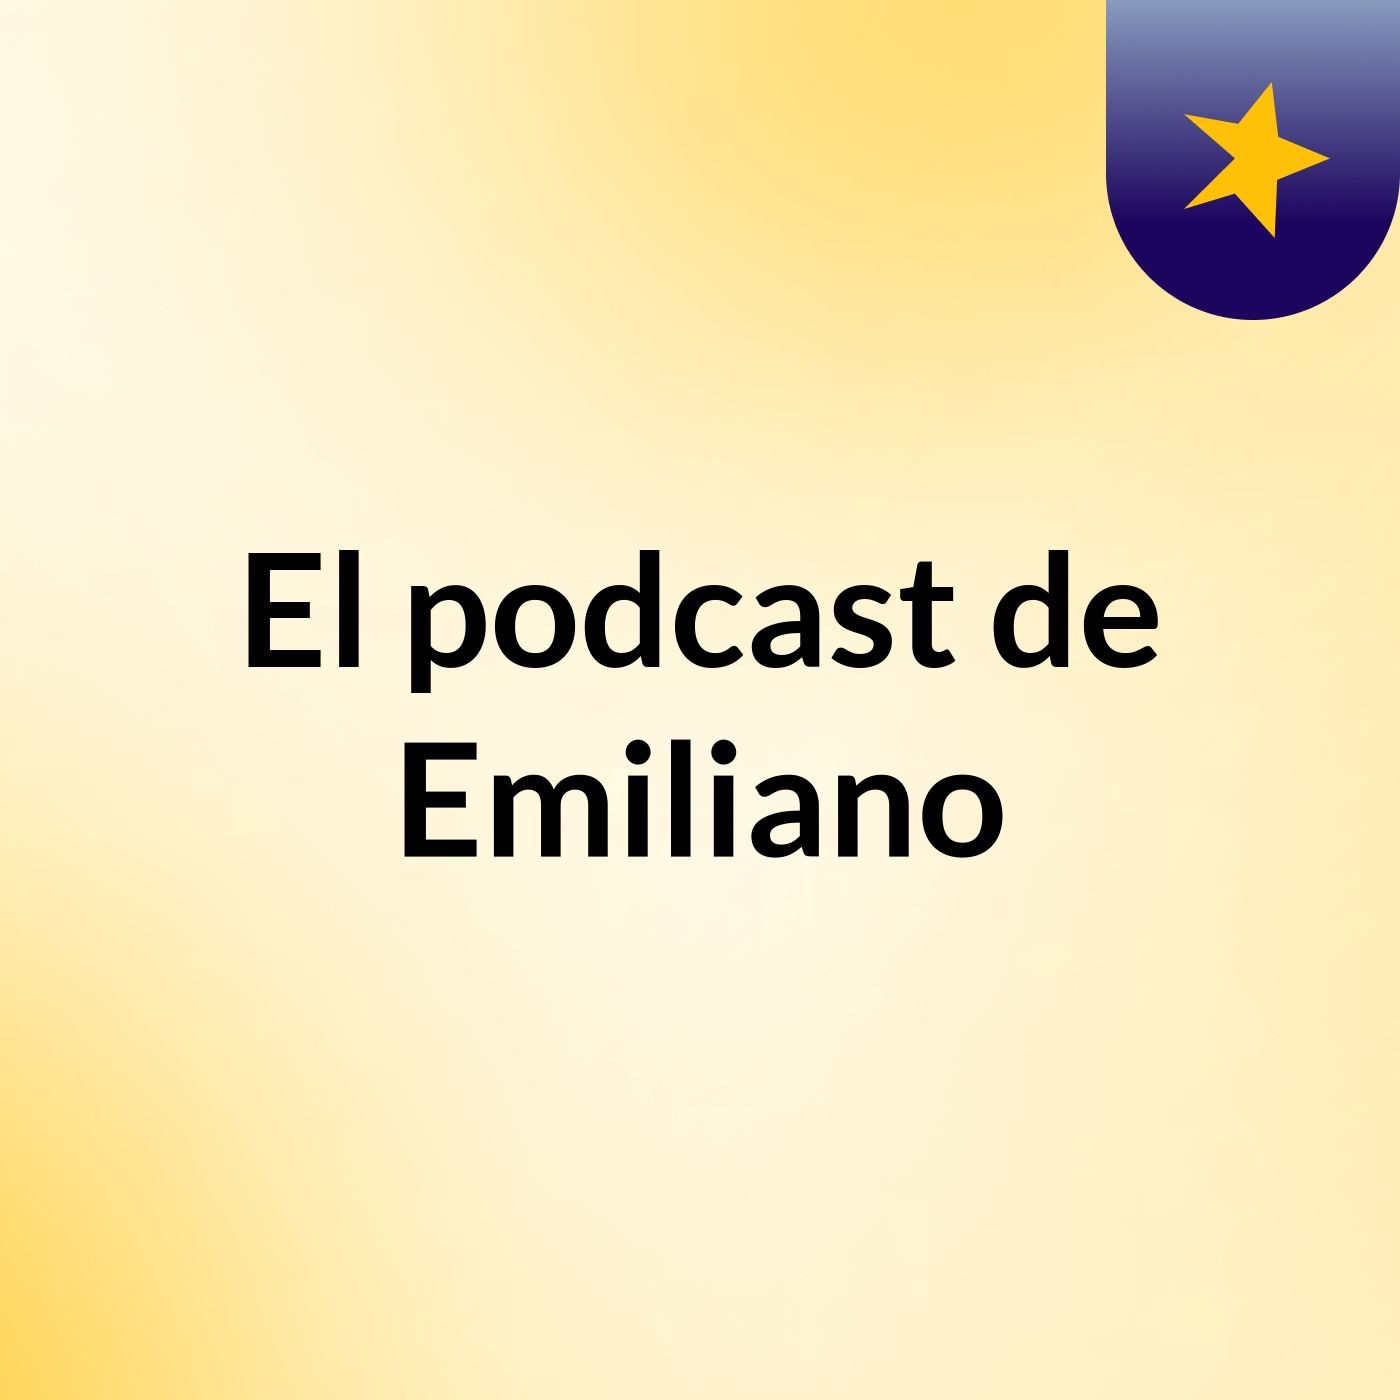 El podcast de Emiliano